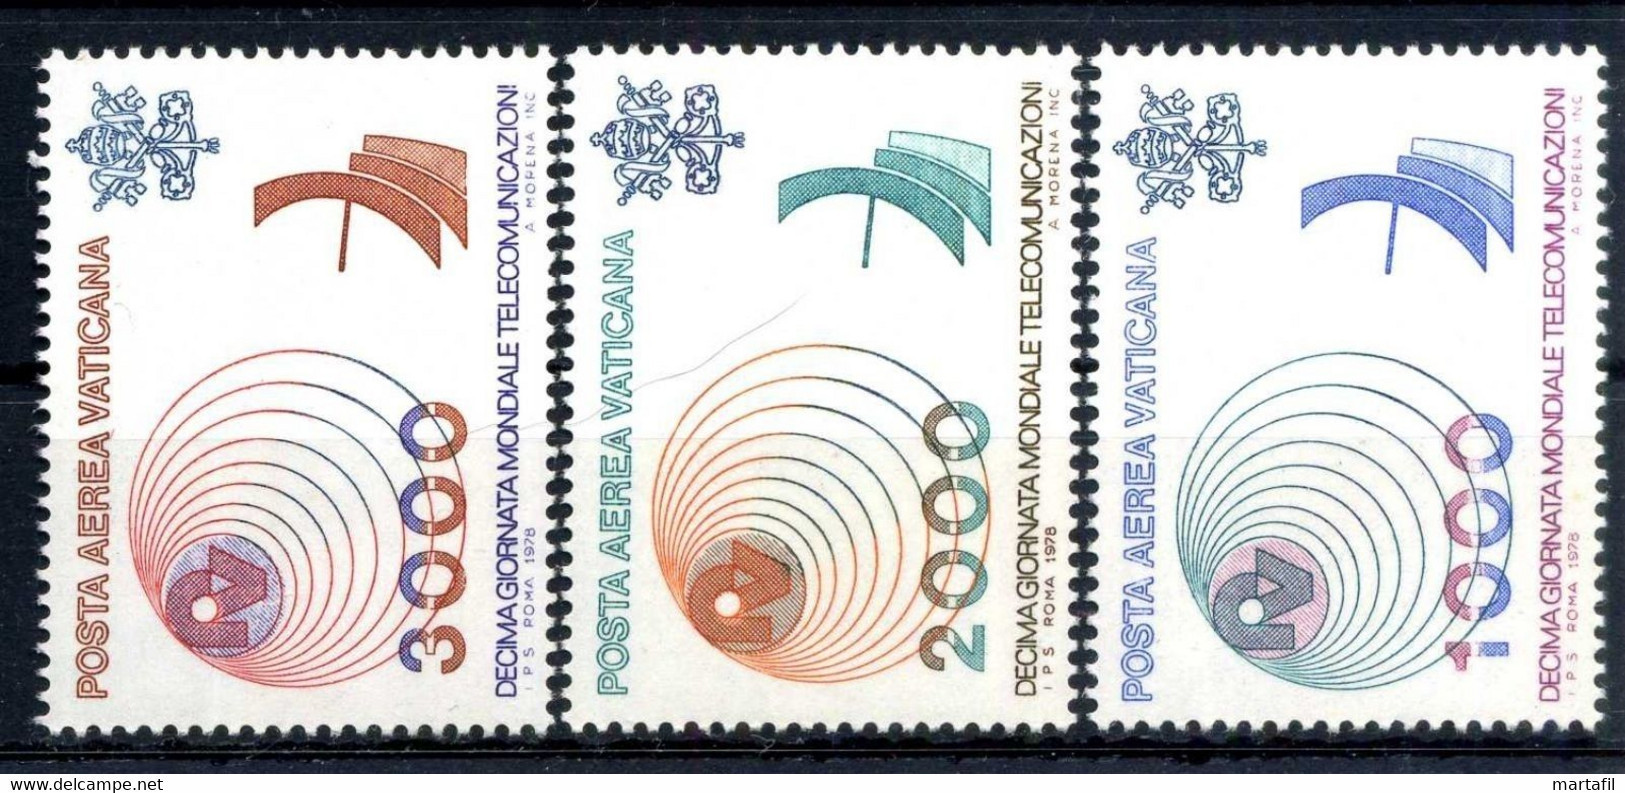 1978 VATICANO Posta Aerea PA SC3V MNH ** - Unused Stamps